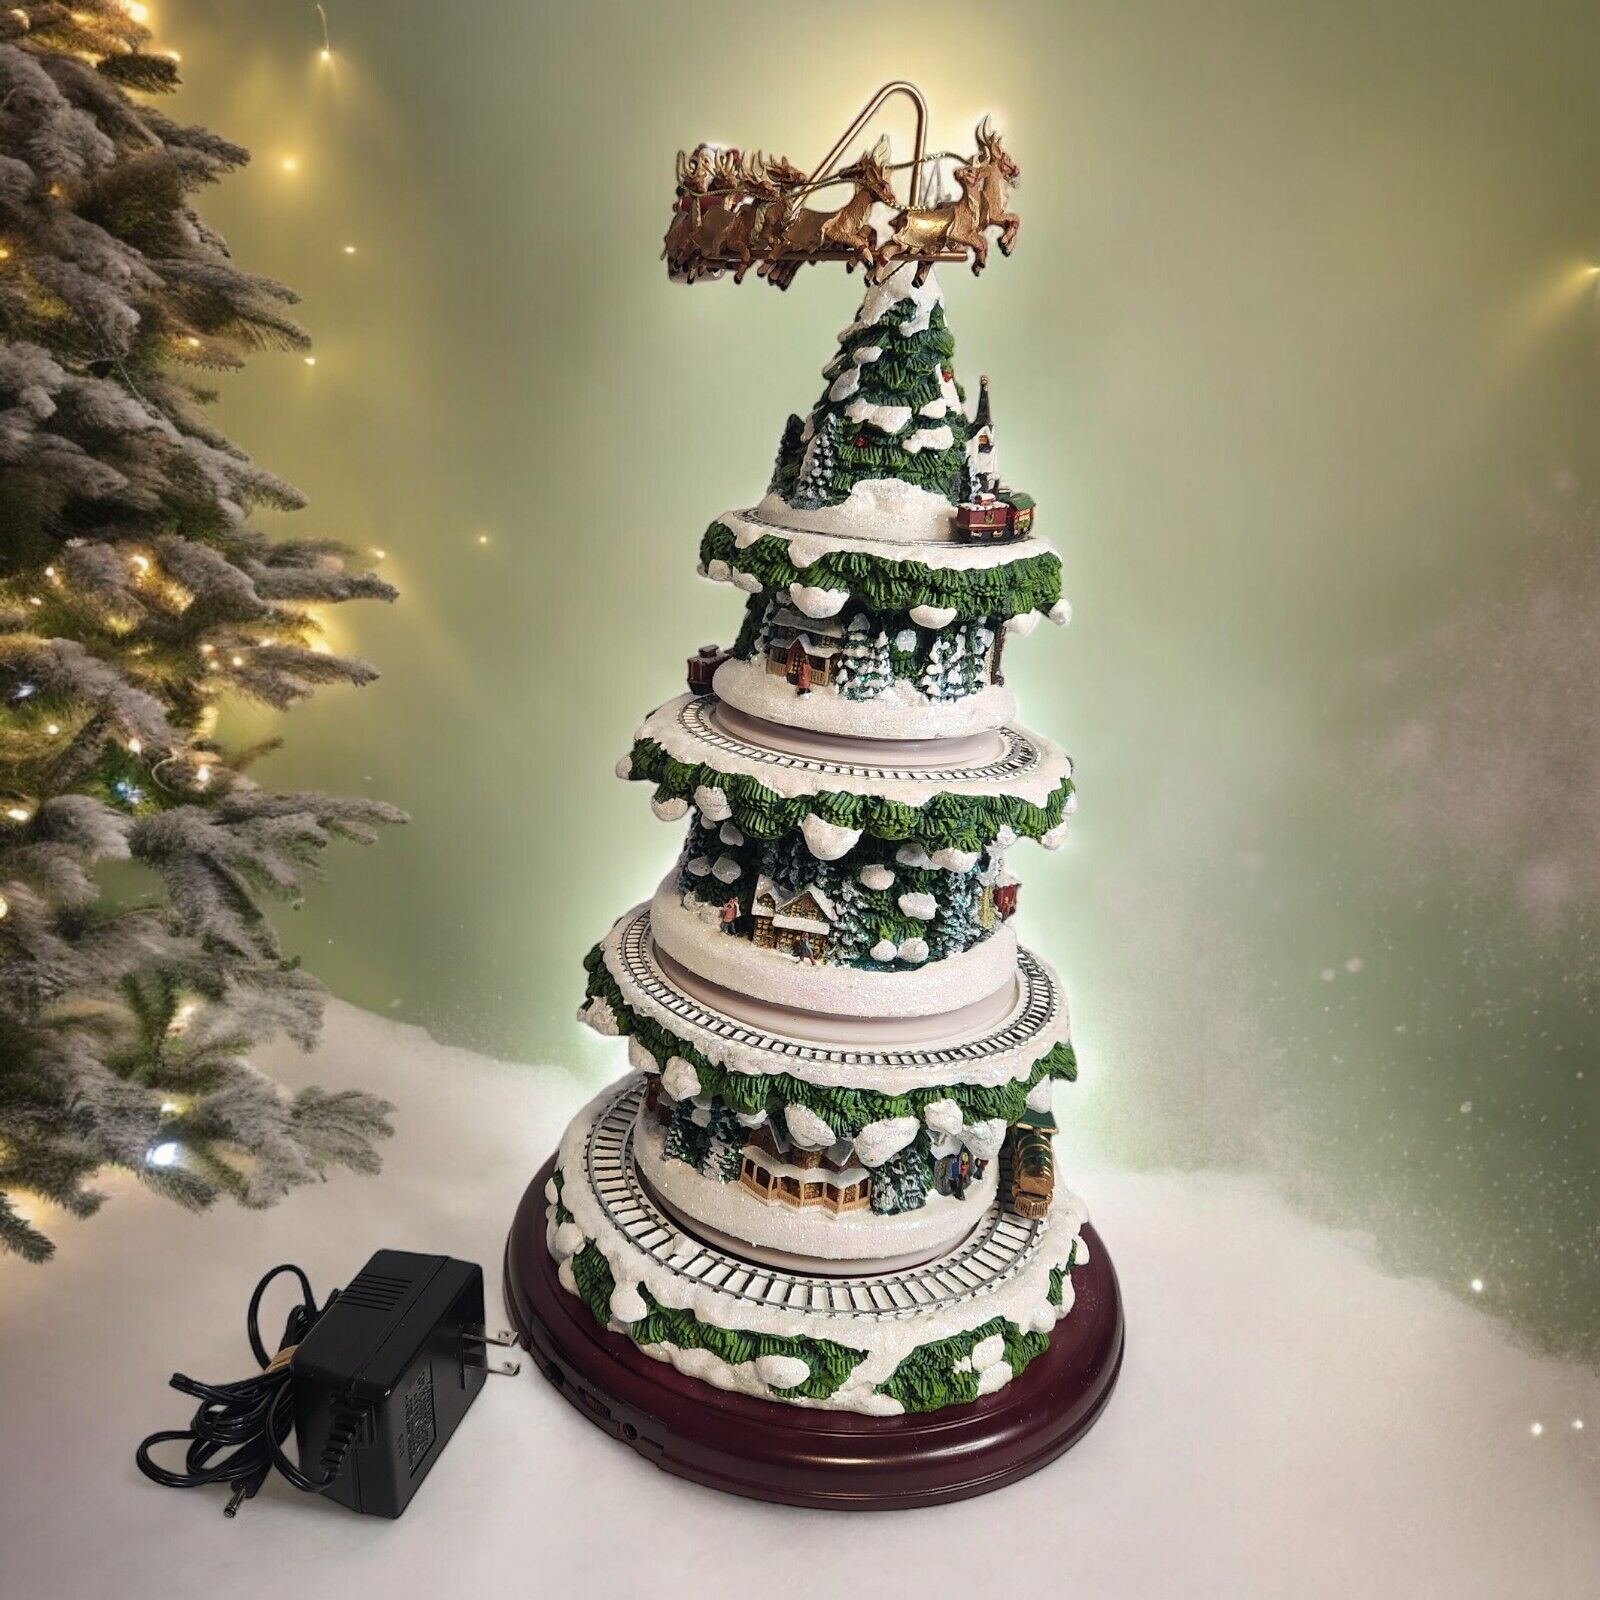 Thomas Kinkade Wonderland Express Animated Christmas Tree W/Trains Music in Box